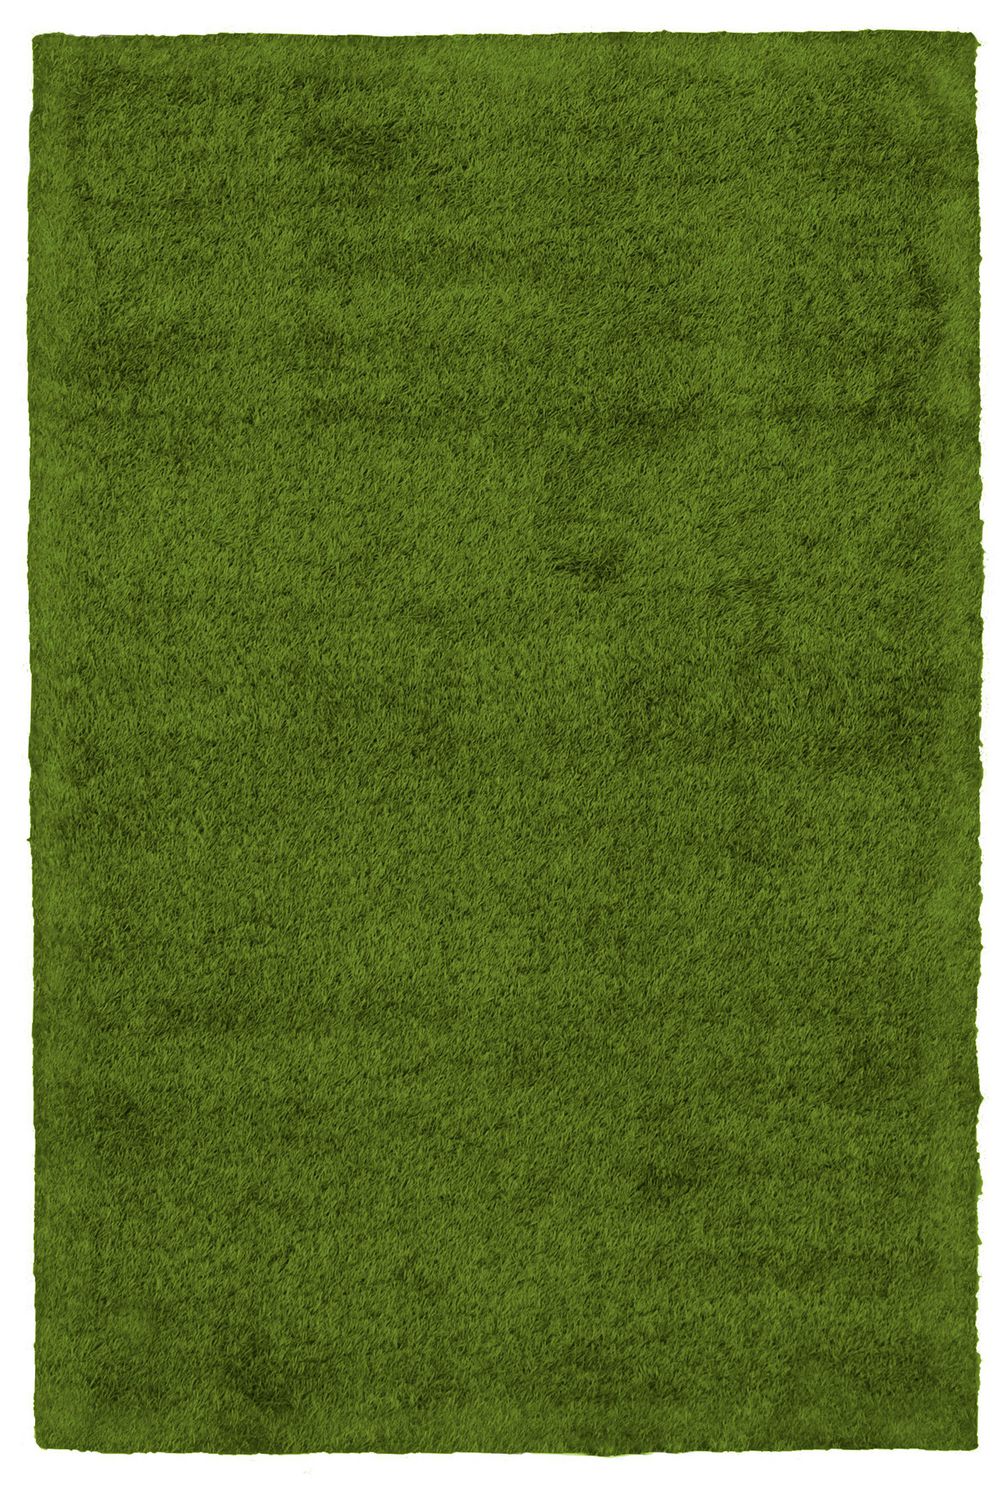 Ecarpetgallery Faux Grass Green Rug 4 0, Outdoor Turf Carpet Canada